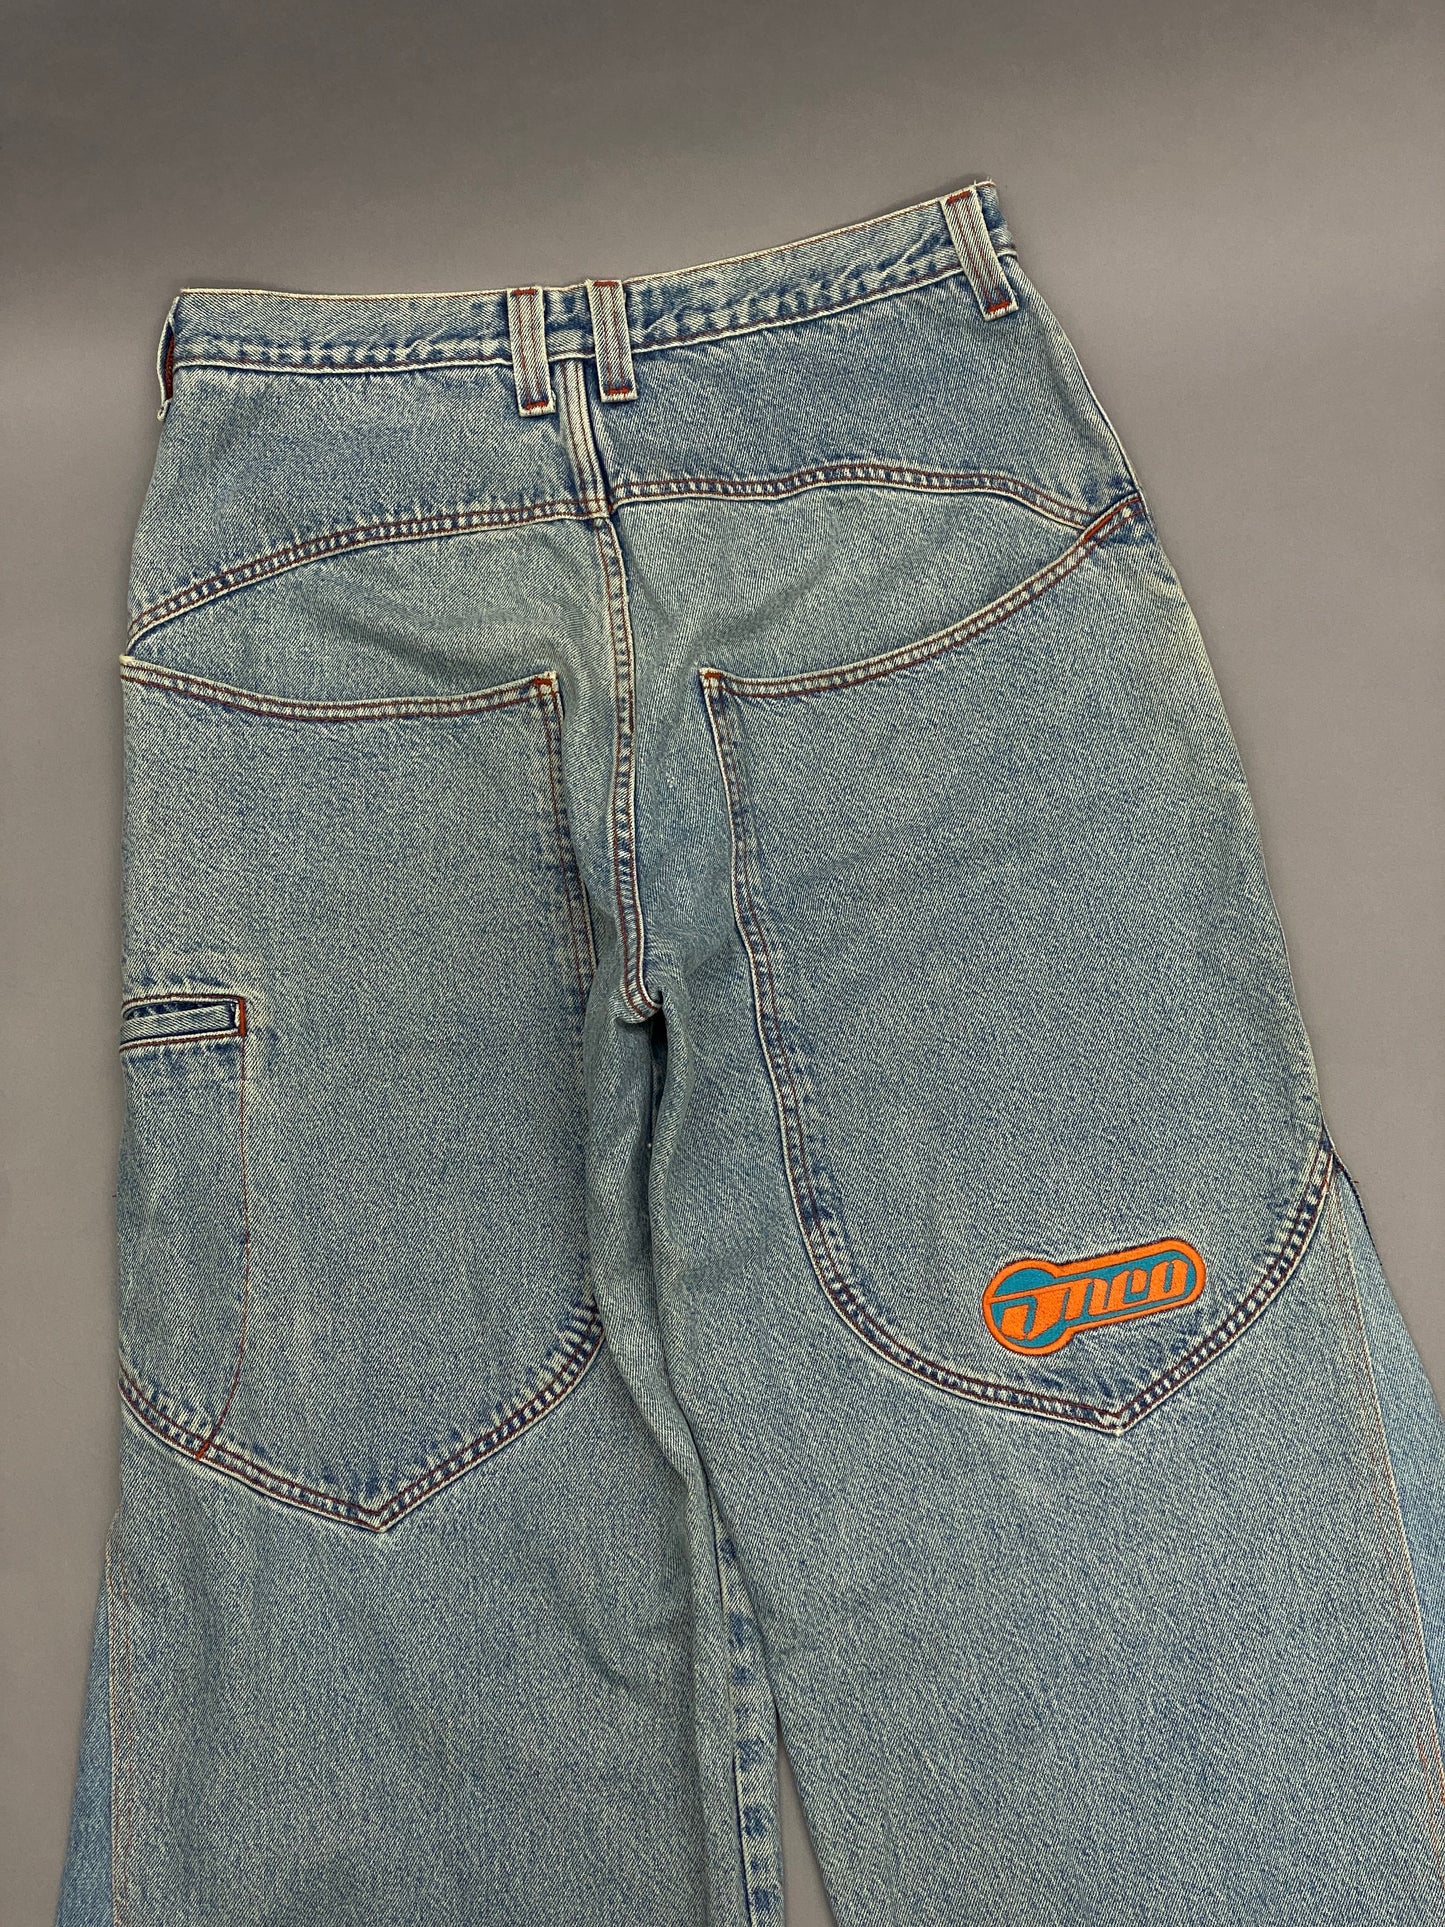 JNCO Flair Vintage Jeans - 34